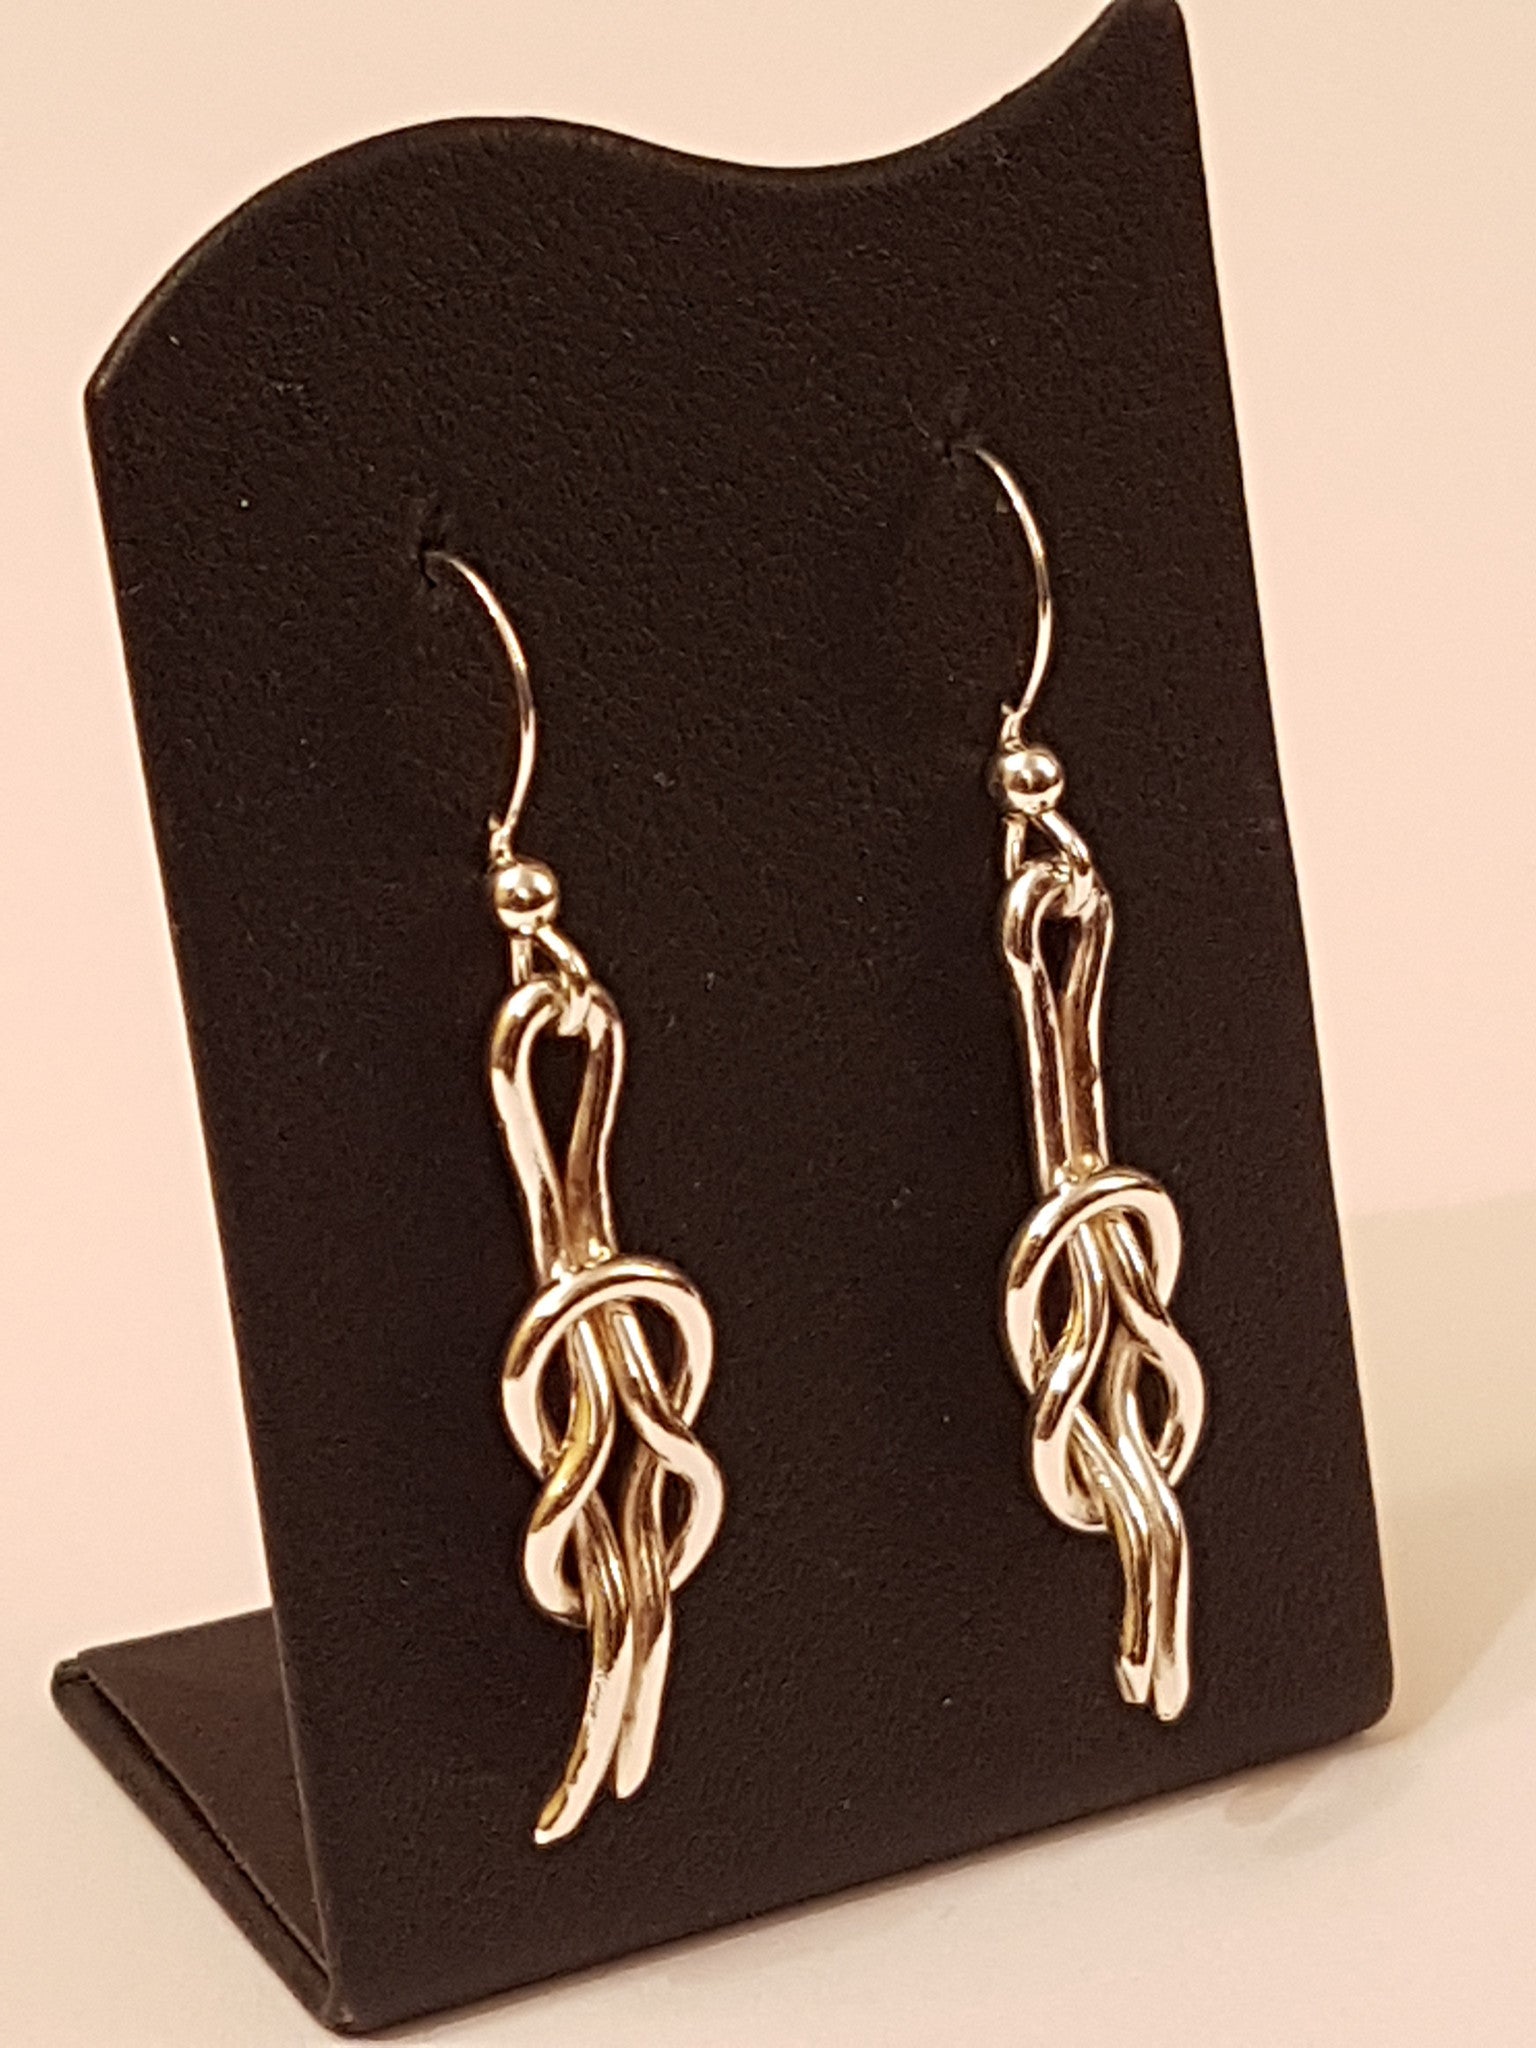 Silver Reef Knot Earrings - stud or drop